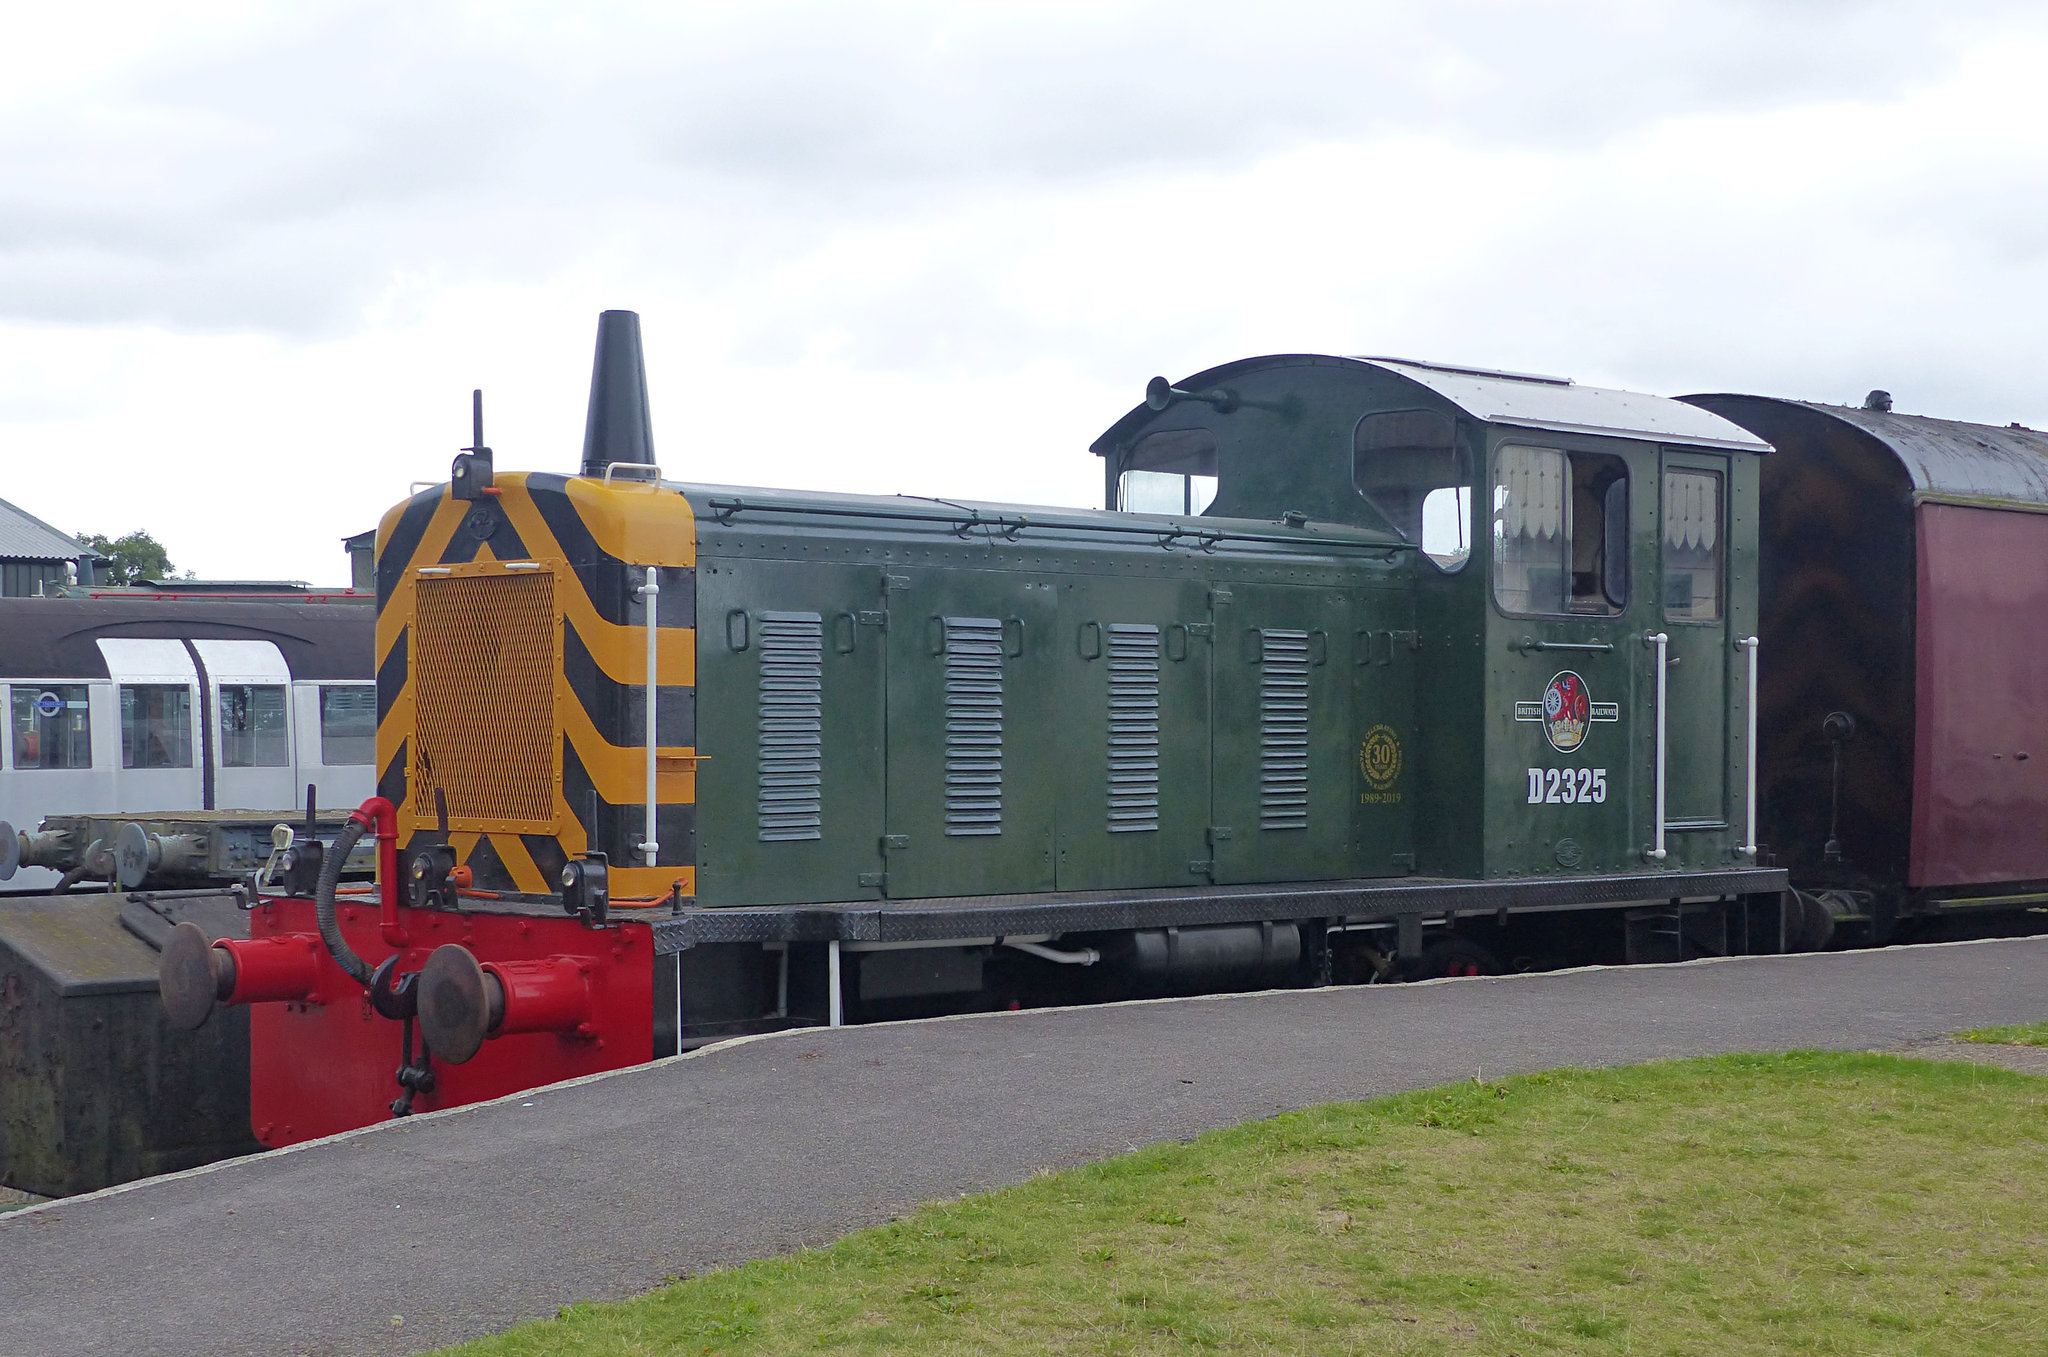 Mangapps Railway & Museum (2) - 31 August 2021